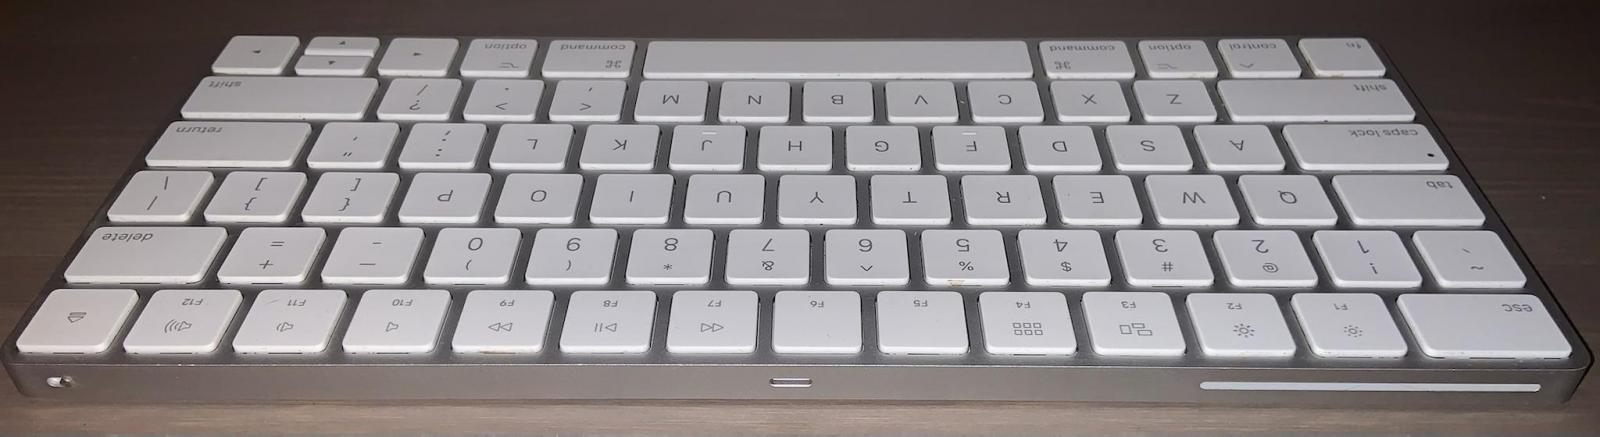 Photo of Apple Magic Keyboard 2 Silver